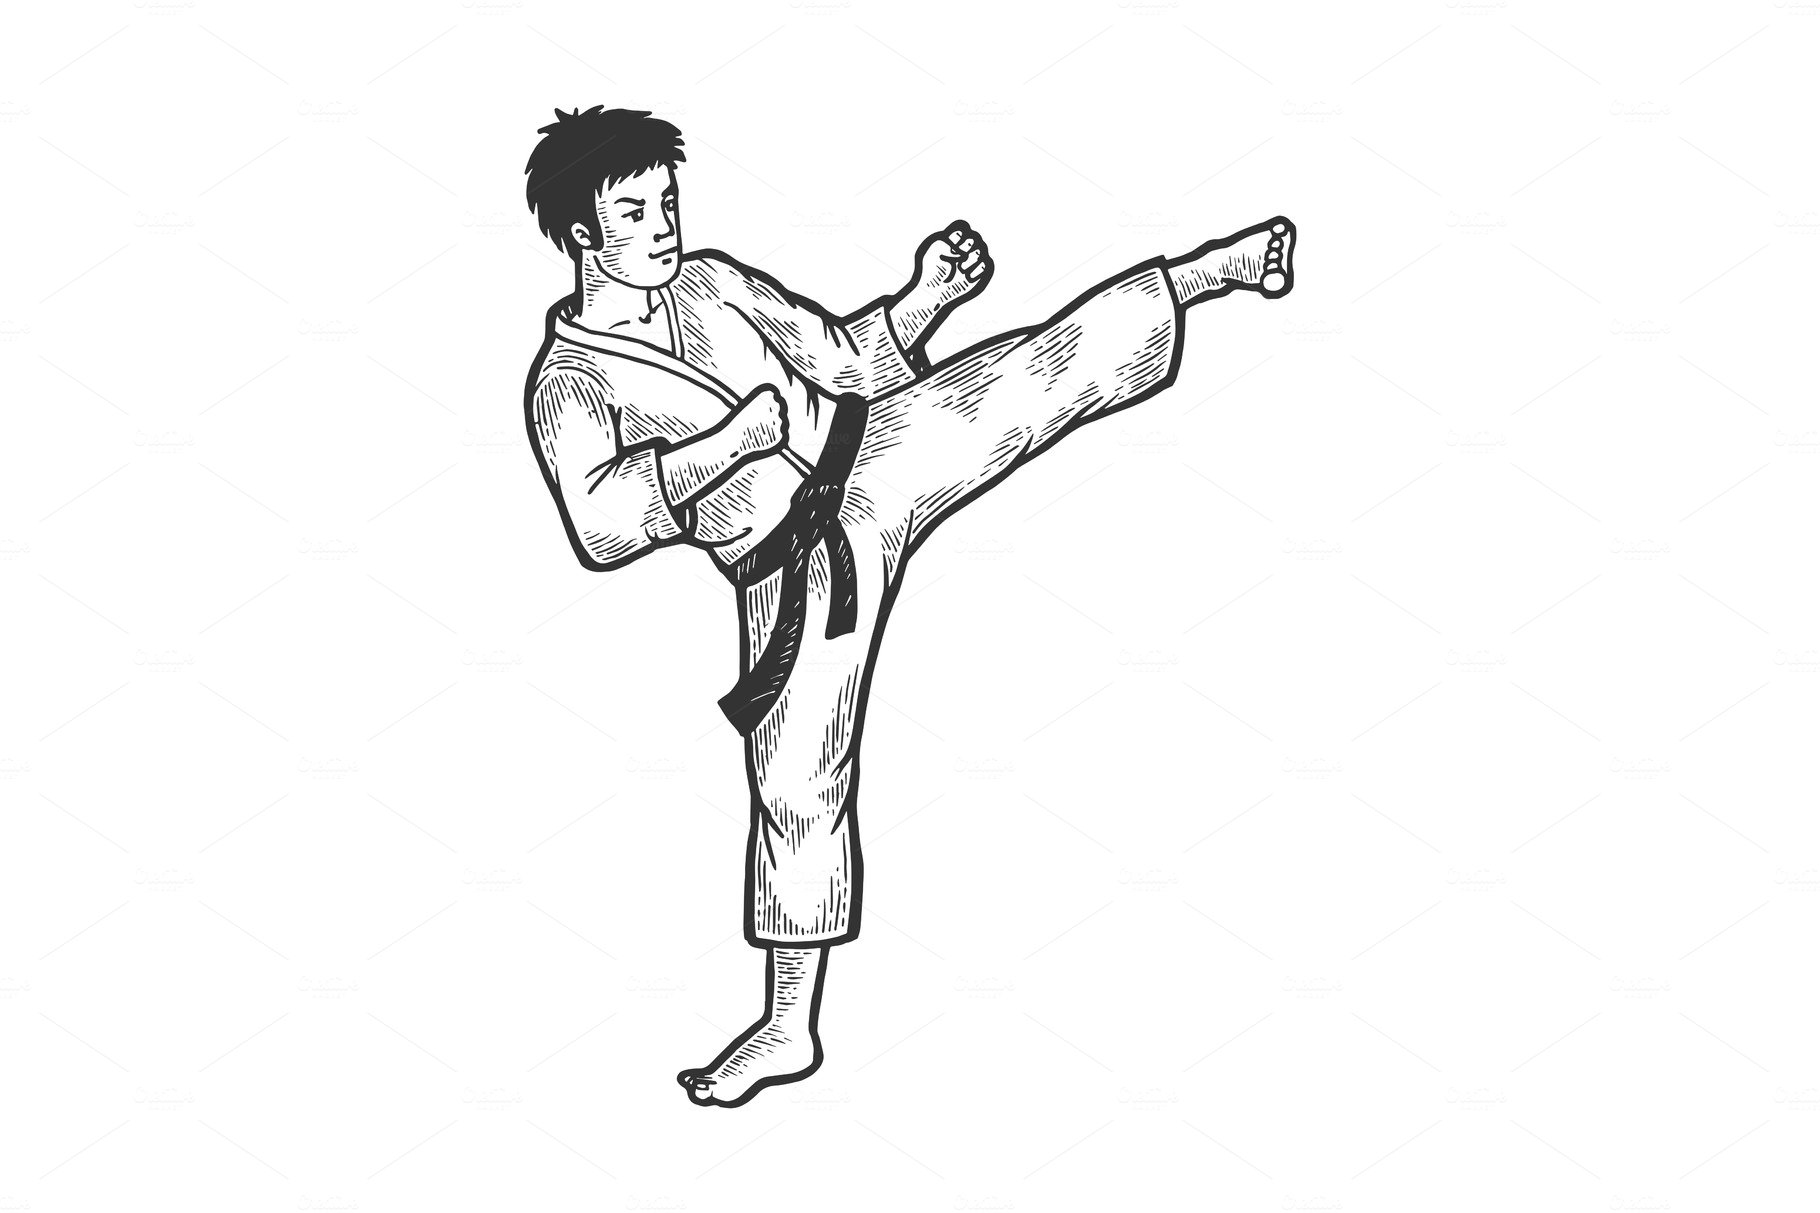 Martial arts sketch 4 by bonisol on DeviantArt